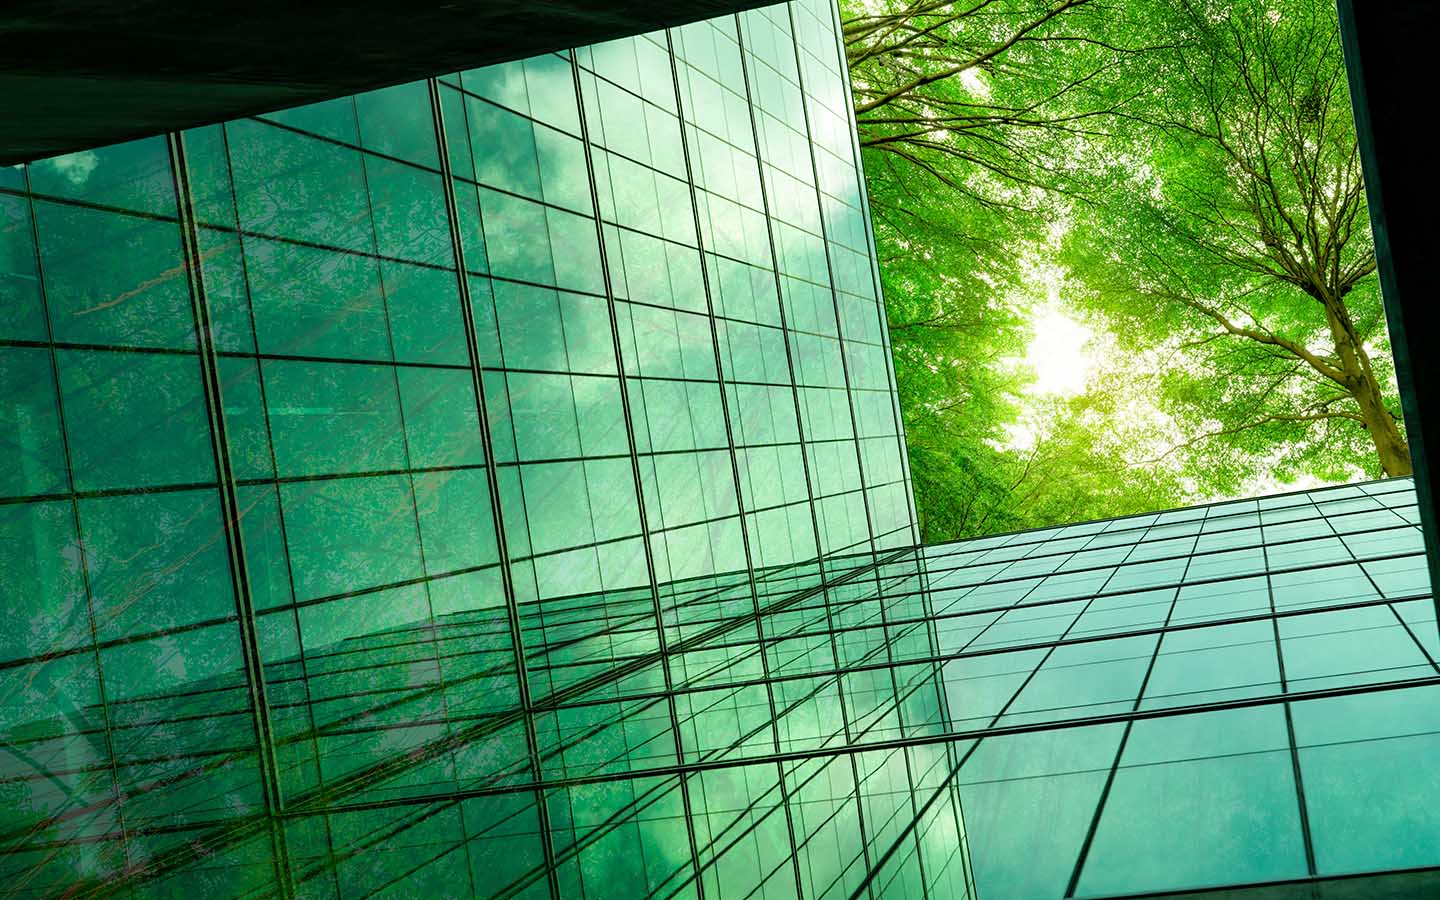 net-zero buildings promote green living